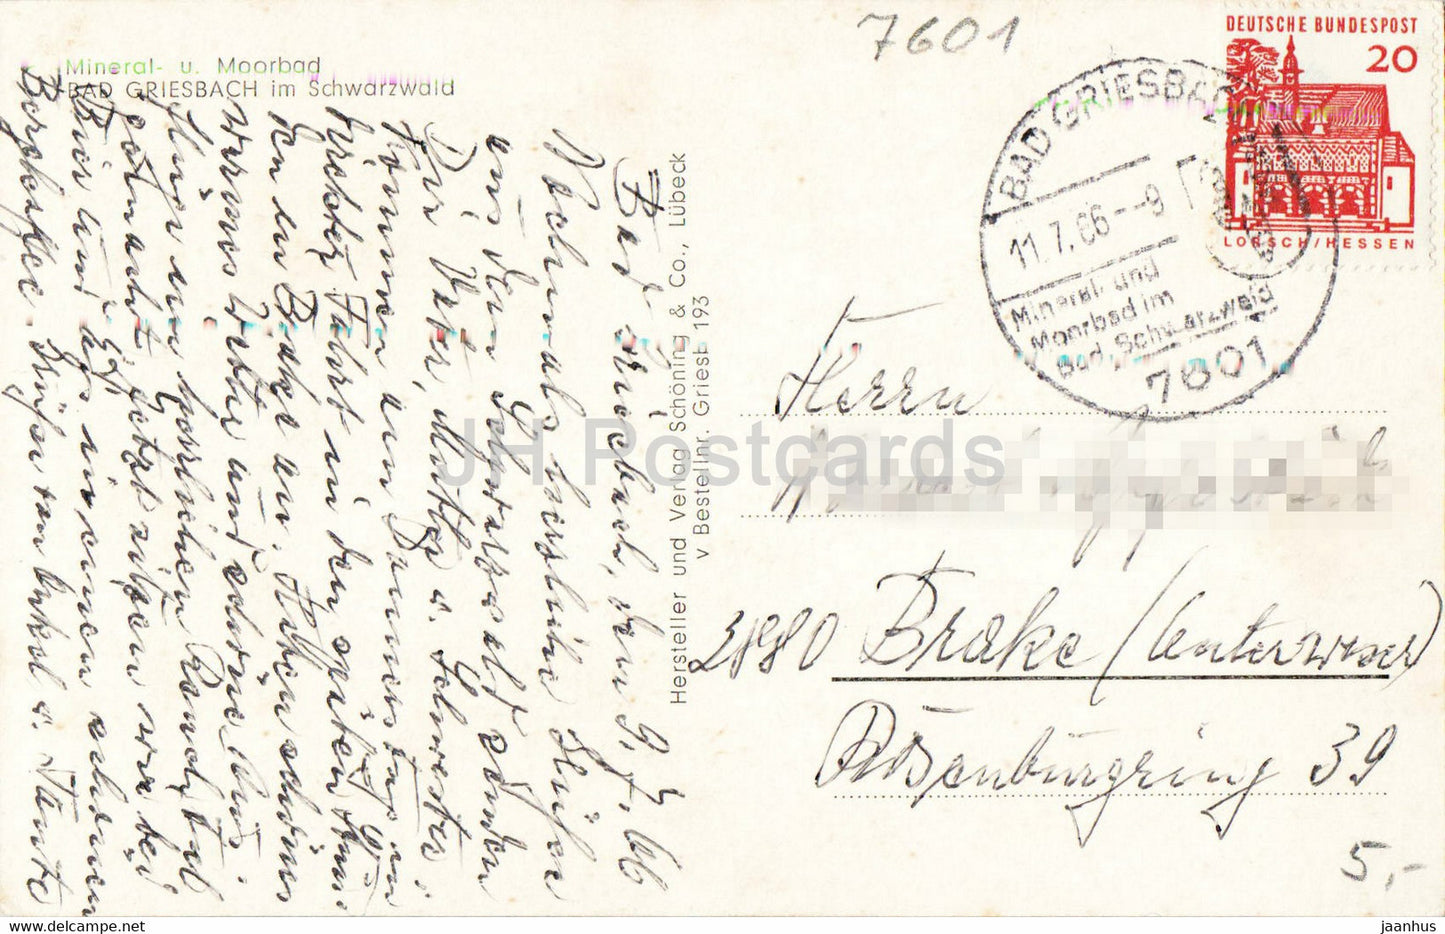 Bad Griesbach im Schwarzwald - carte postale ancienne - 1966 - Allemagne - utilisé